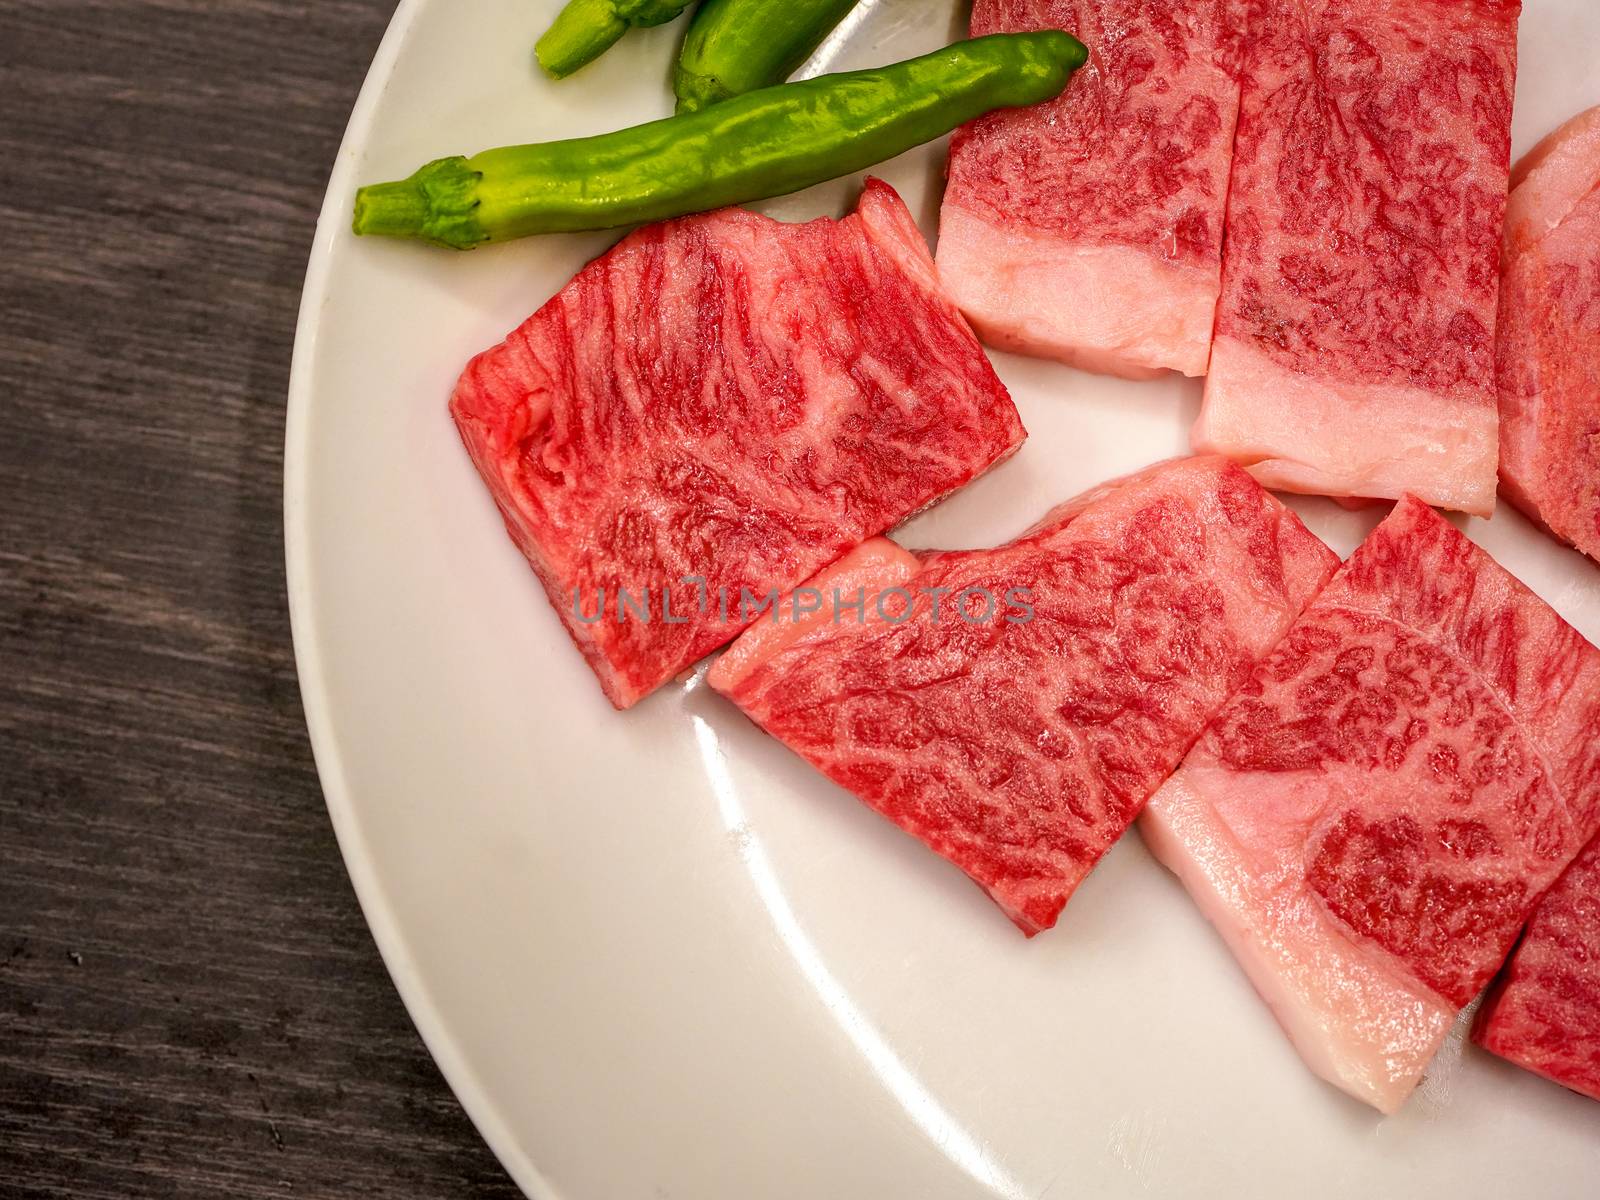 Matsusaka Beef on white plate in yakiniku restaurant. Matsusaka City, Japan. (Japan's Most Expensive Beef)